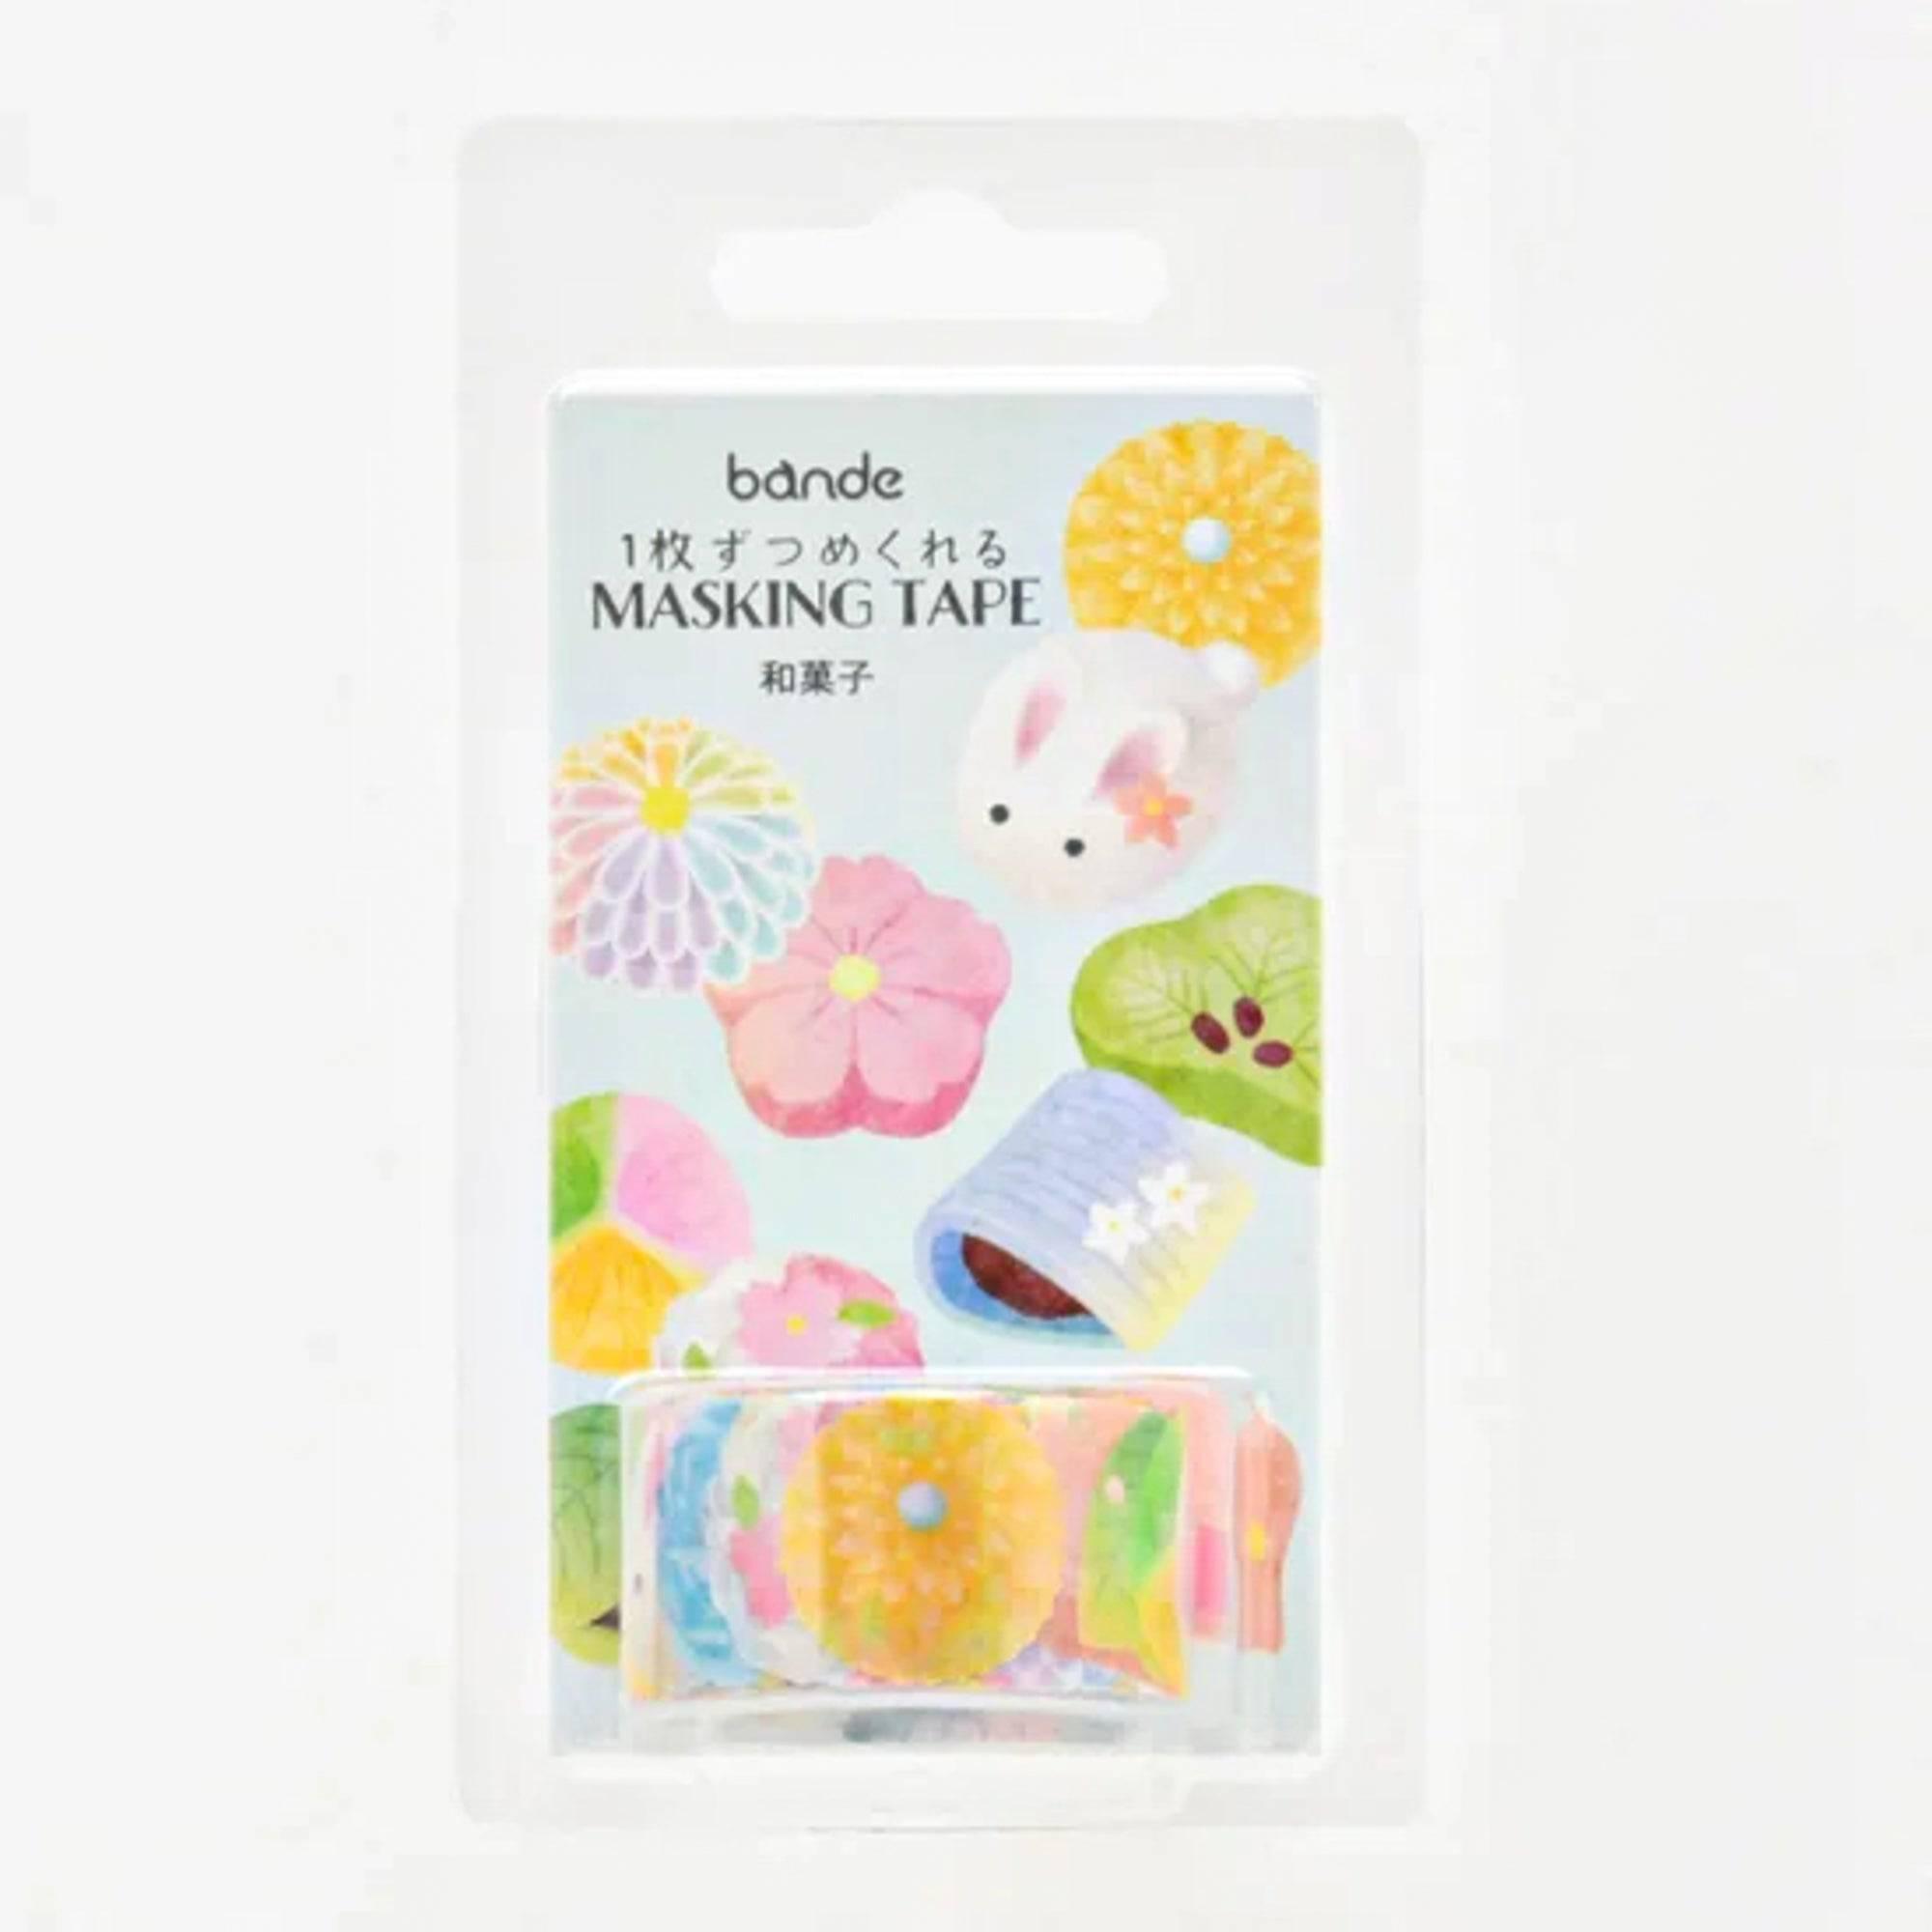 Wagashi Japanese Sweet Washi Tape Sticker Roll - Bande - Komorebi Stationery